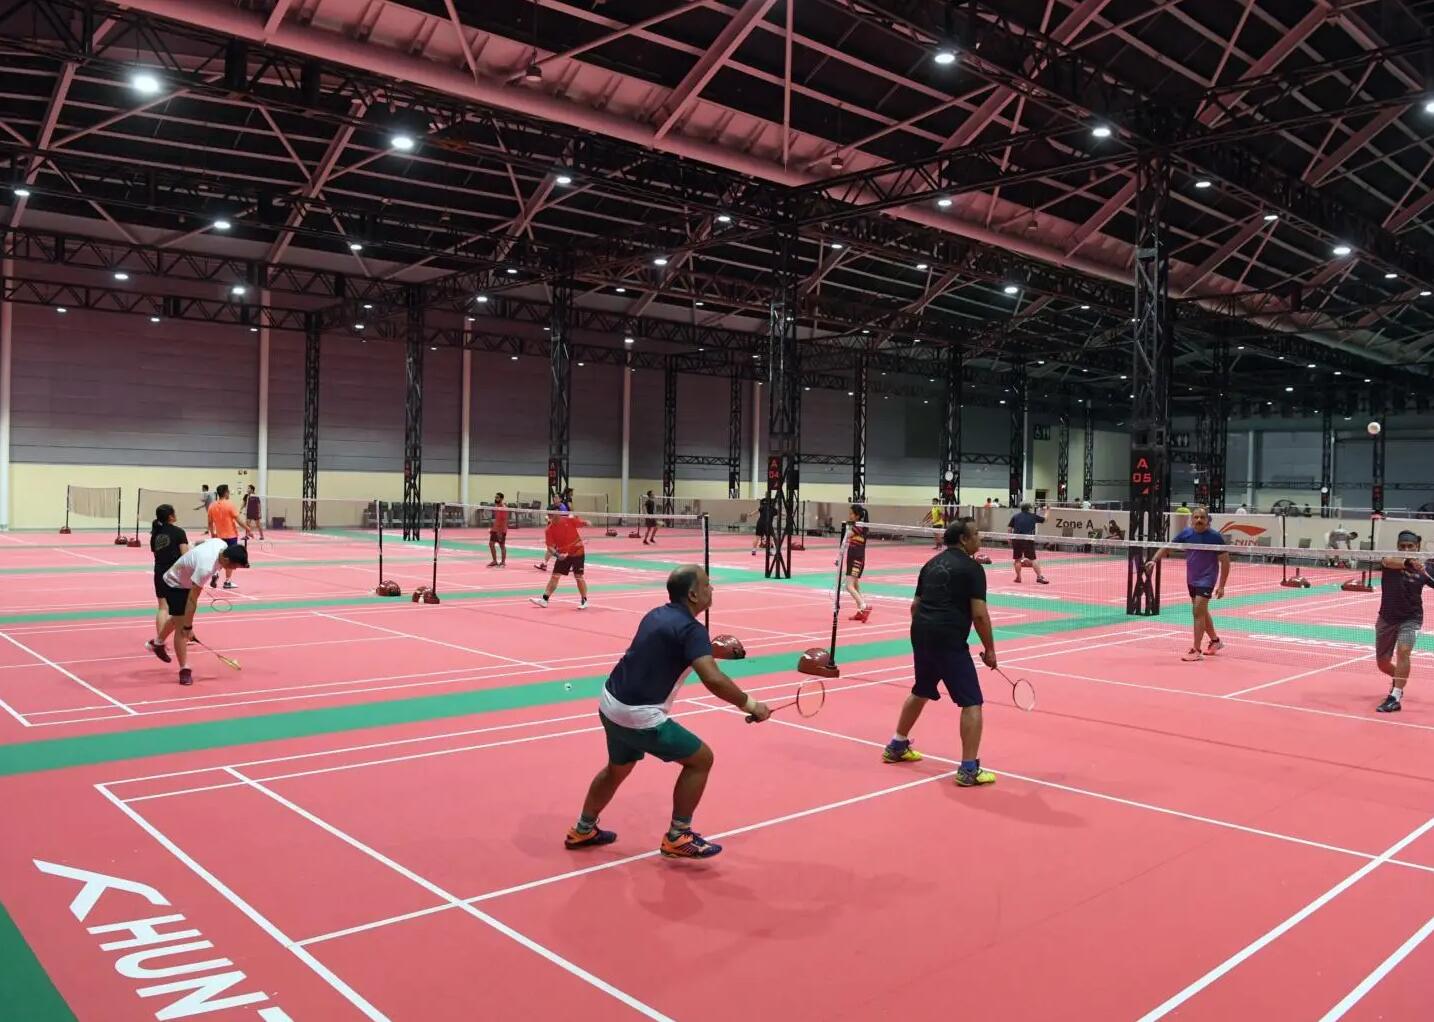 singapore badminton hall expo